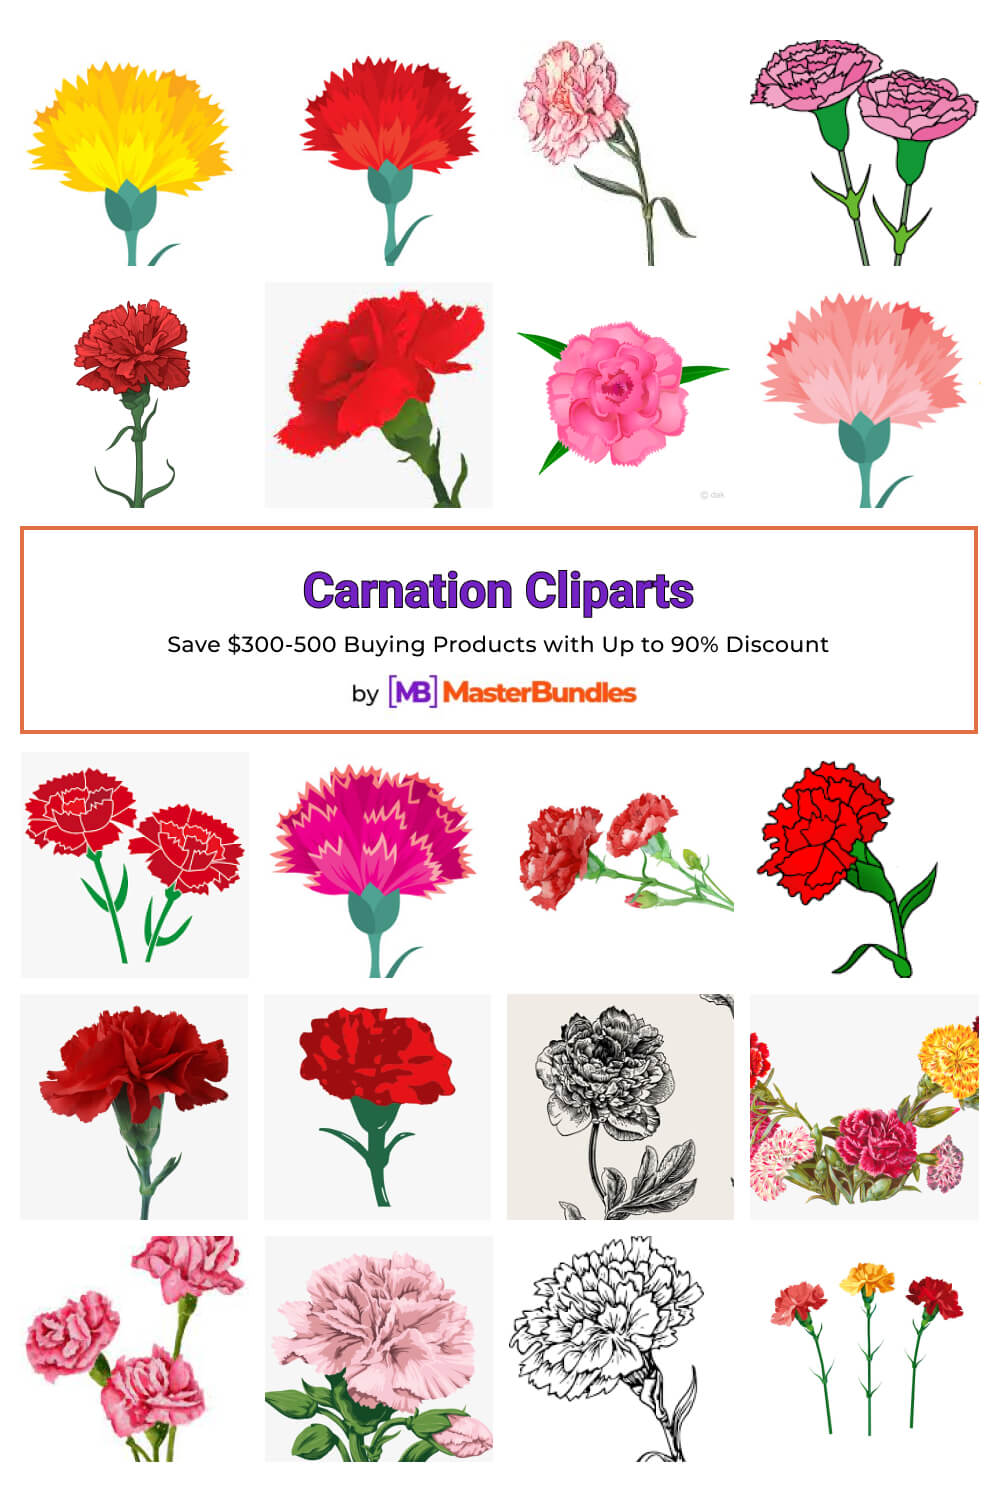 carnation cliparts pinterest image.